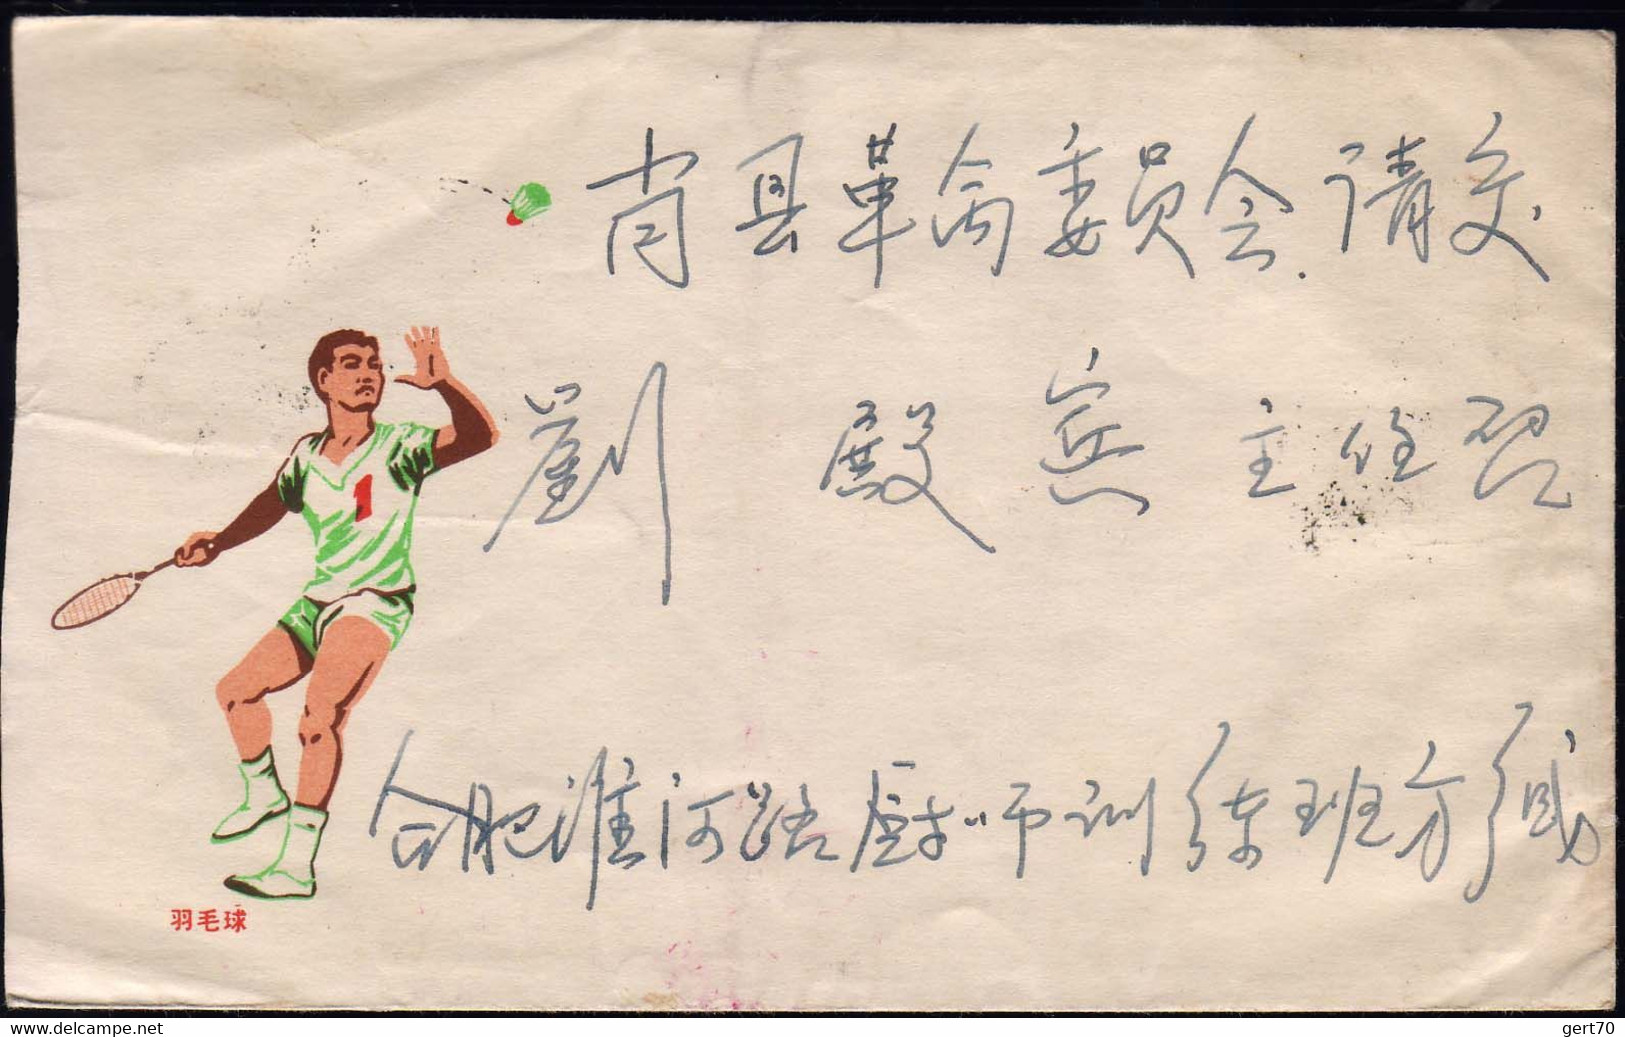 China 1973, Badminton Player, Circulated Cover - Badminton